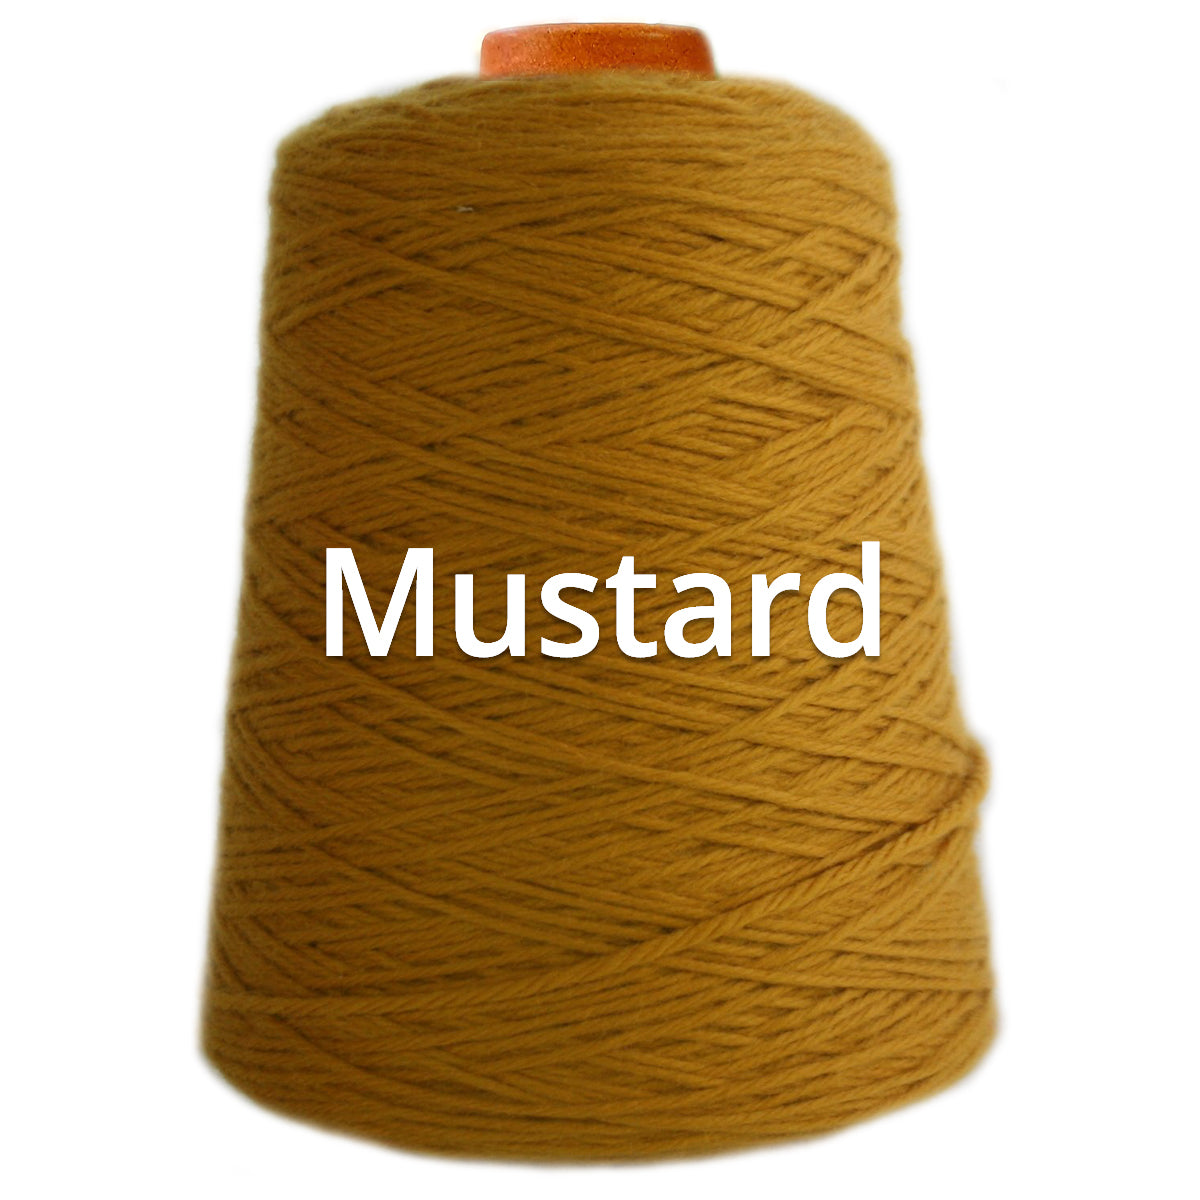 Mustard - Nundle Collection 8 ply Chaffey Yarn 400g Cone